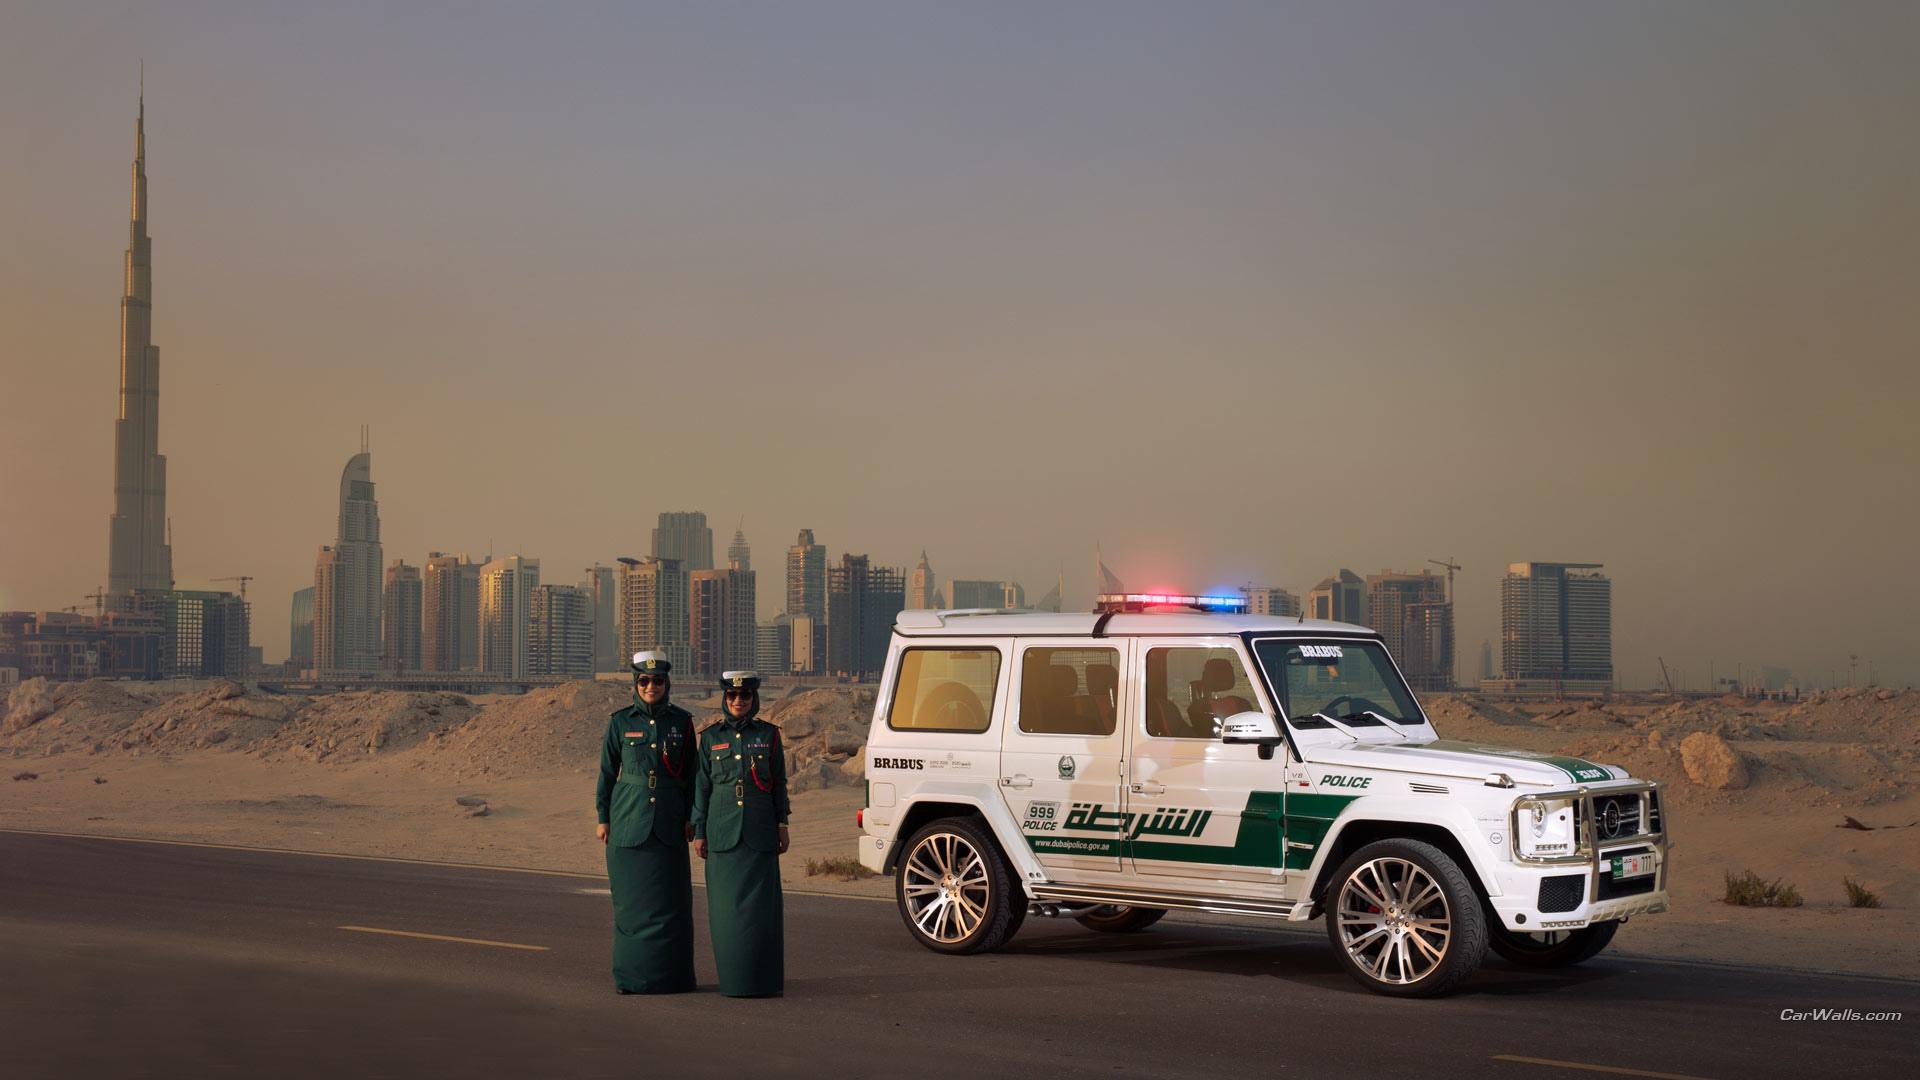 2013 Brabus B63S 700 Widestar Dubai Police Edition at 2048 x 2048 iPad size wallpapers HD quality